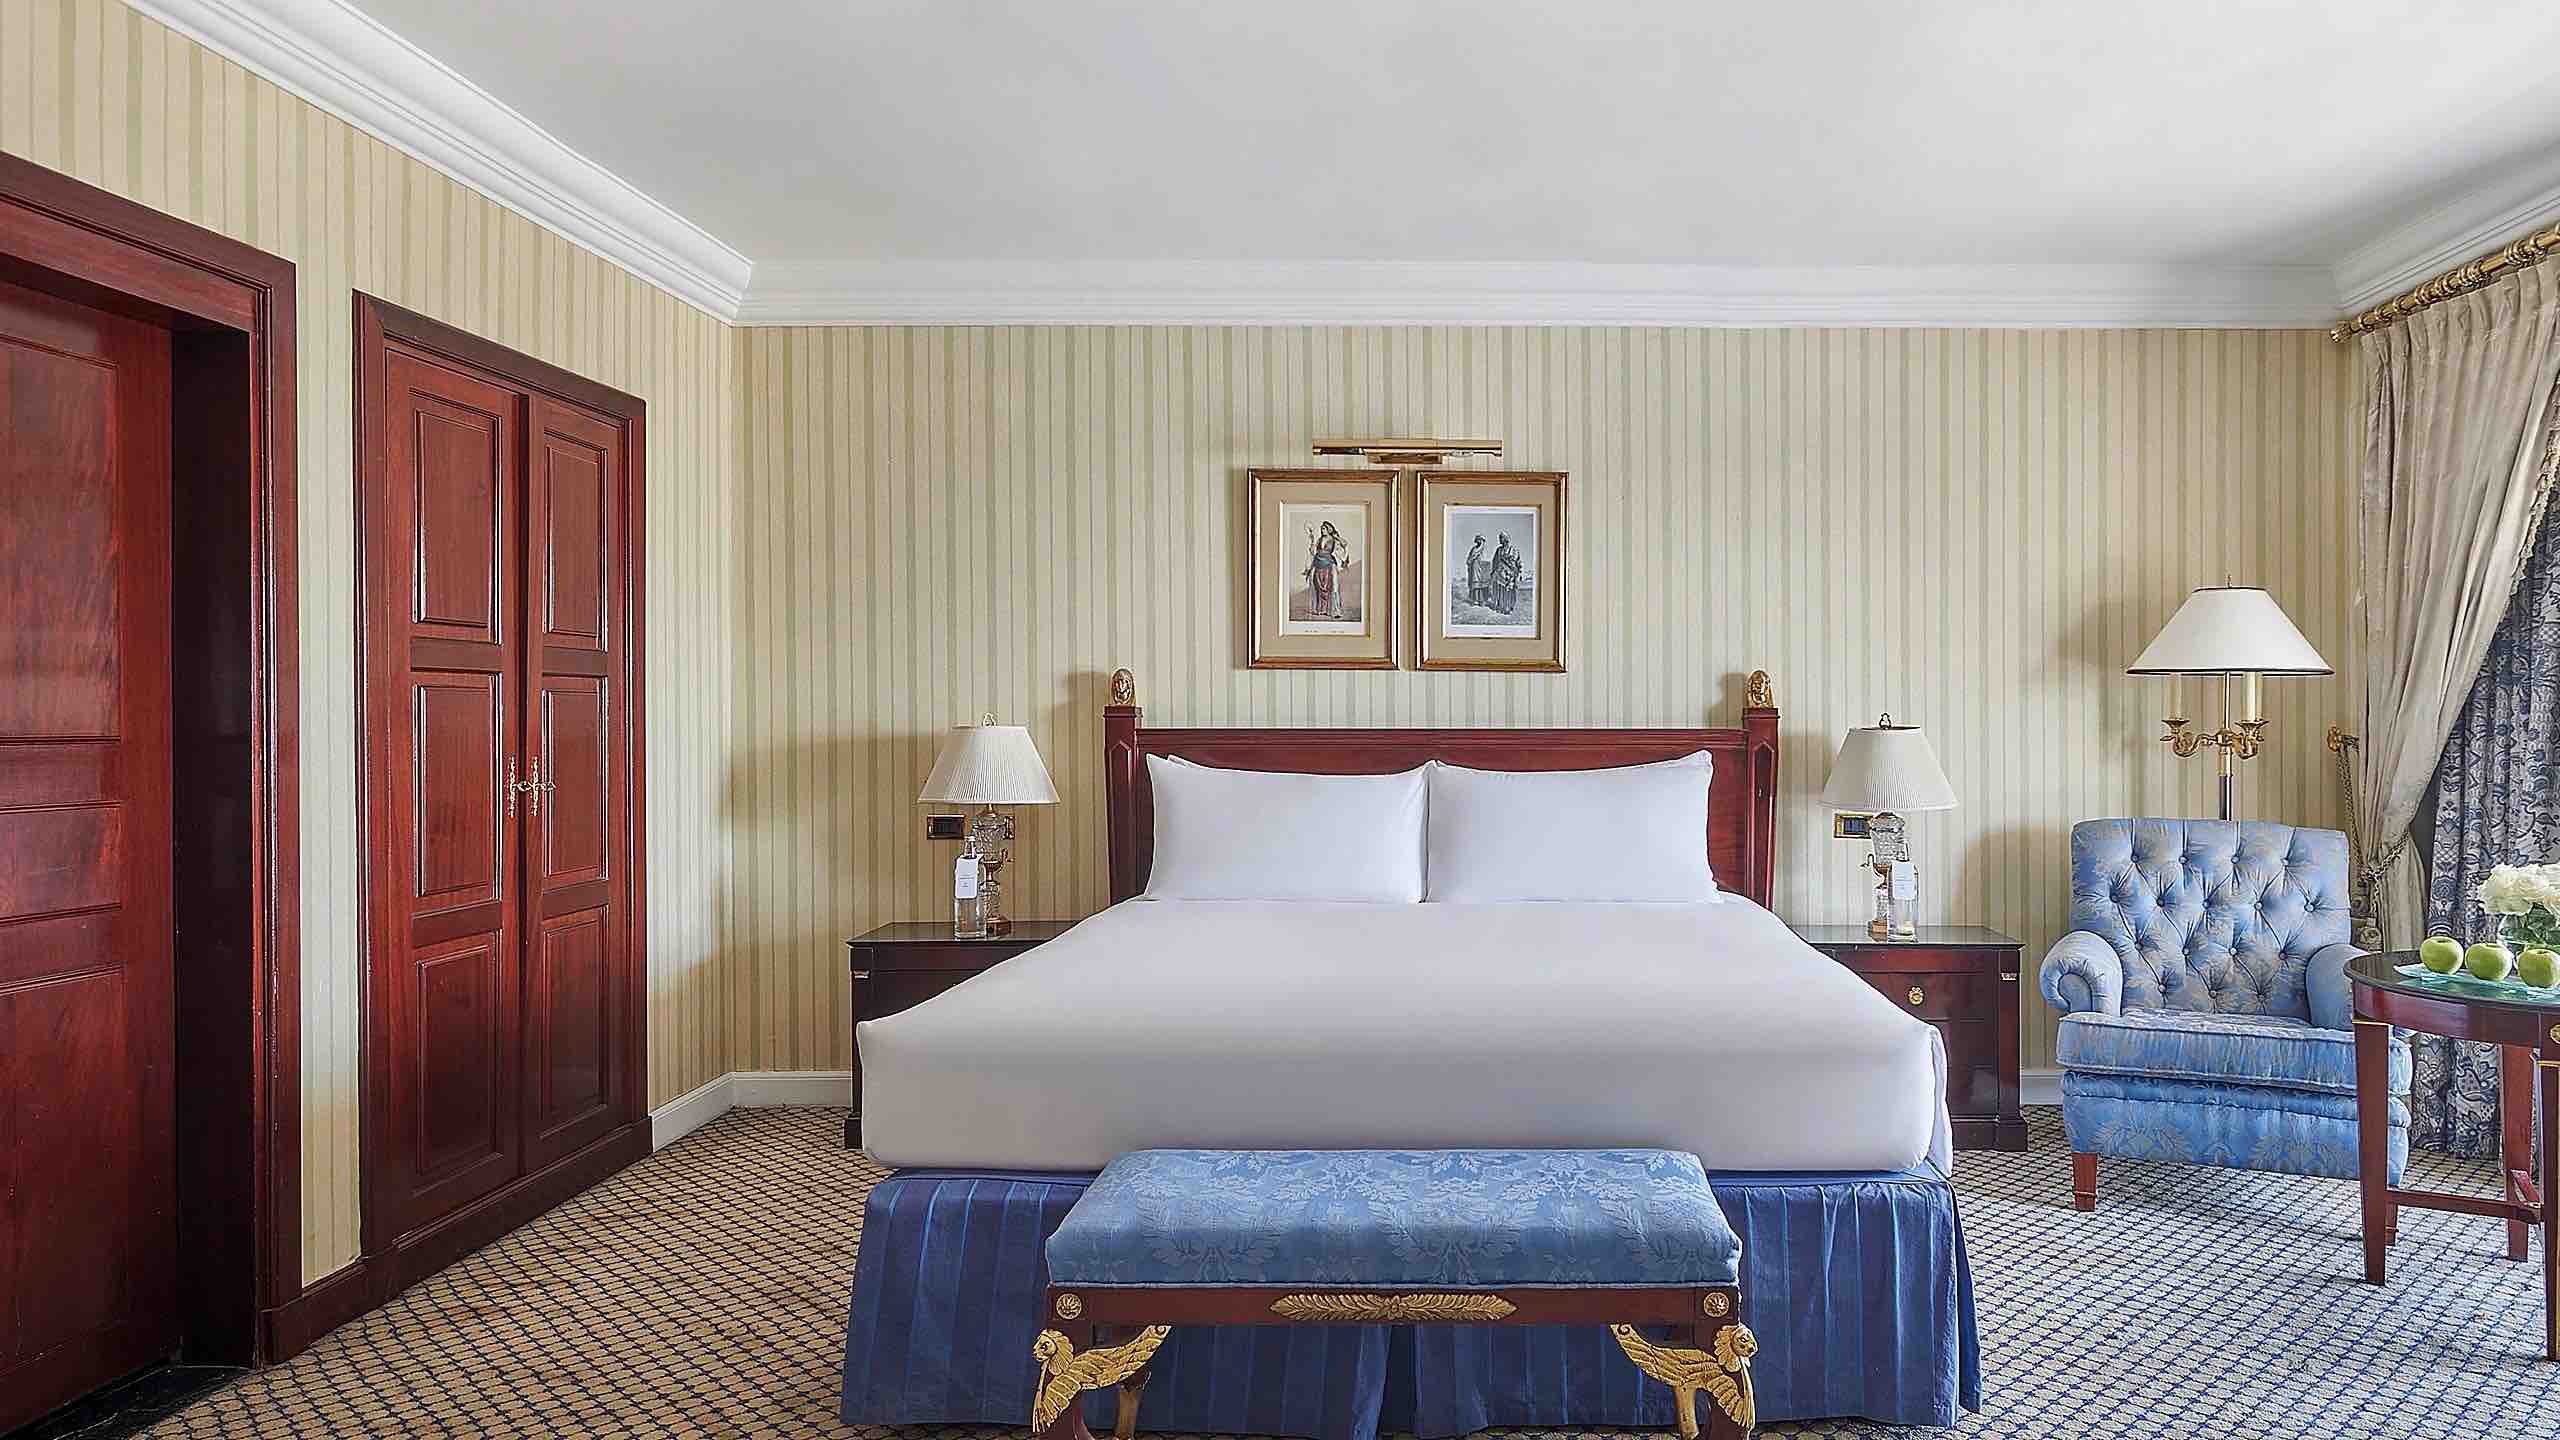 intercontinental hotel bedroom luxury hotels in cairo view